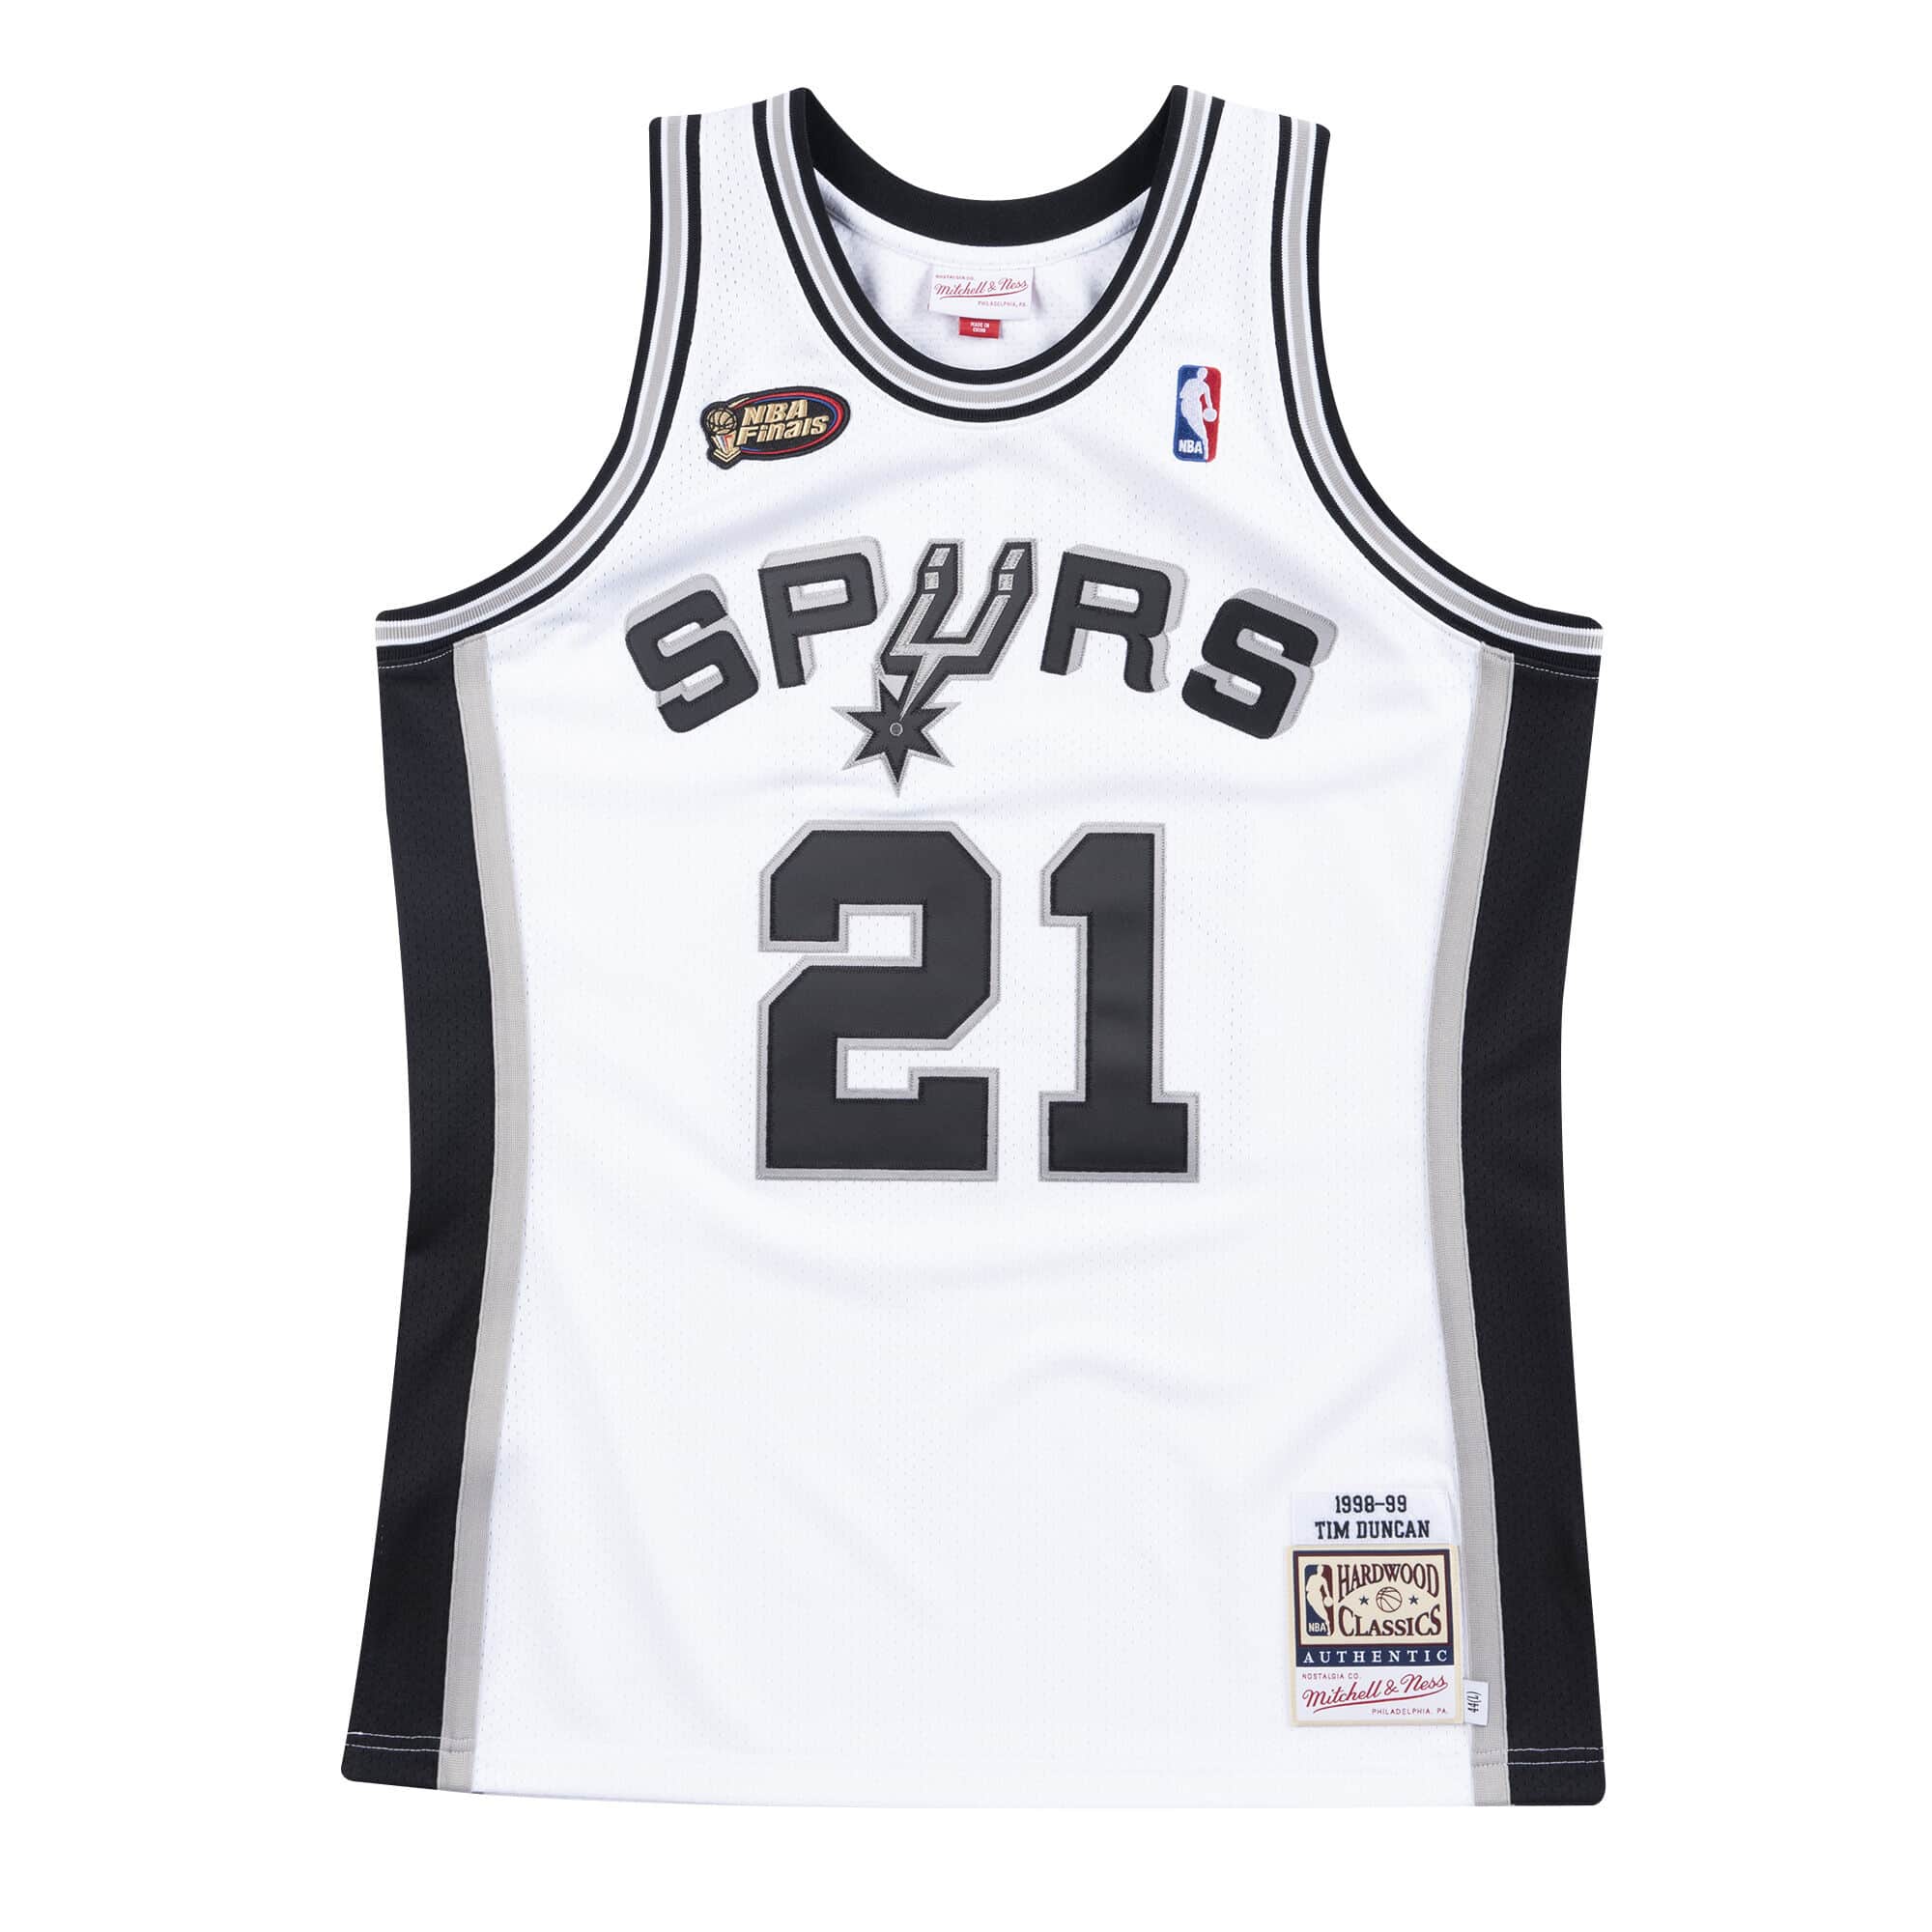 Jersey San Antonio Spurs Home Finals 1998-99 Tim Duncan